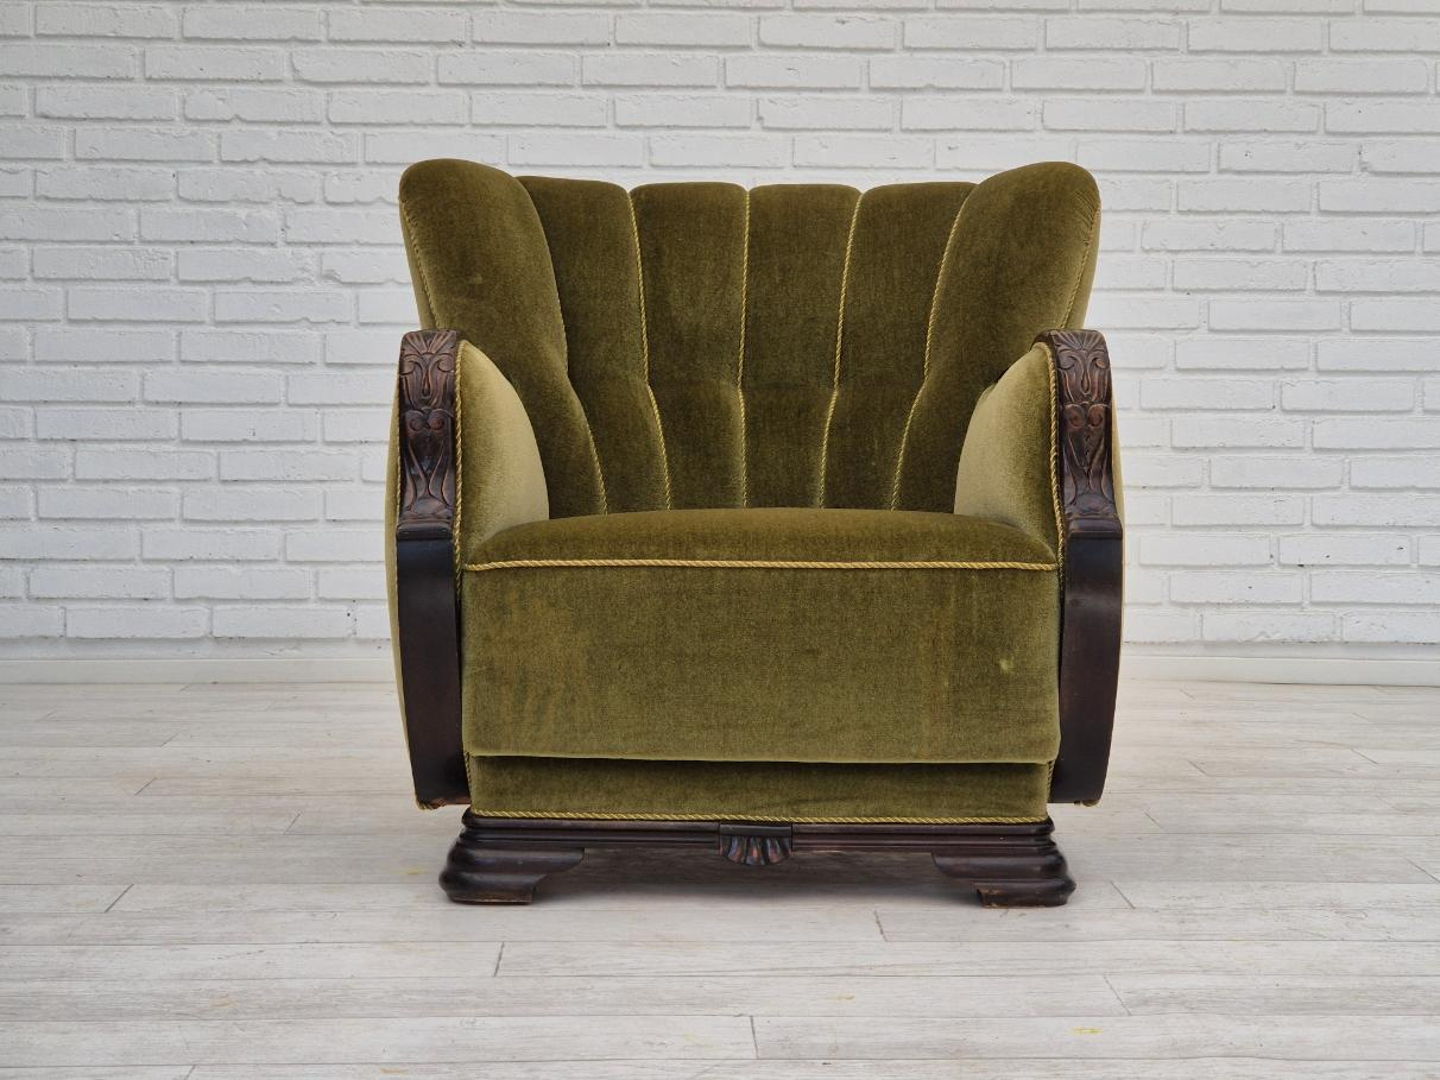 1950s, Danish vintage chair, furniture velour, oak wood.